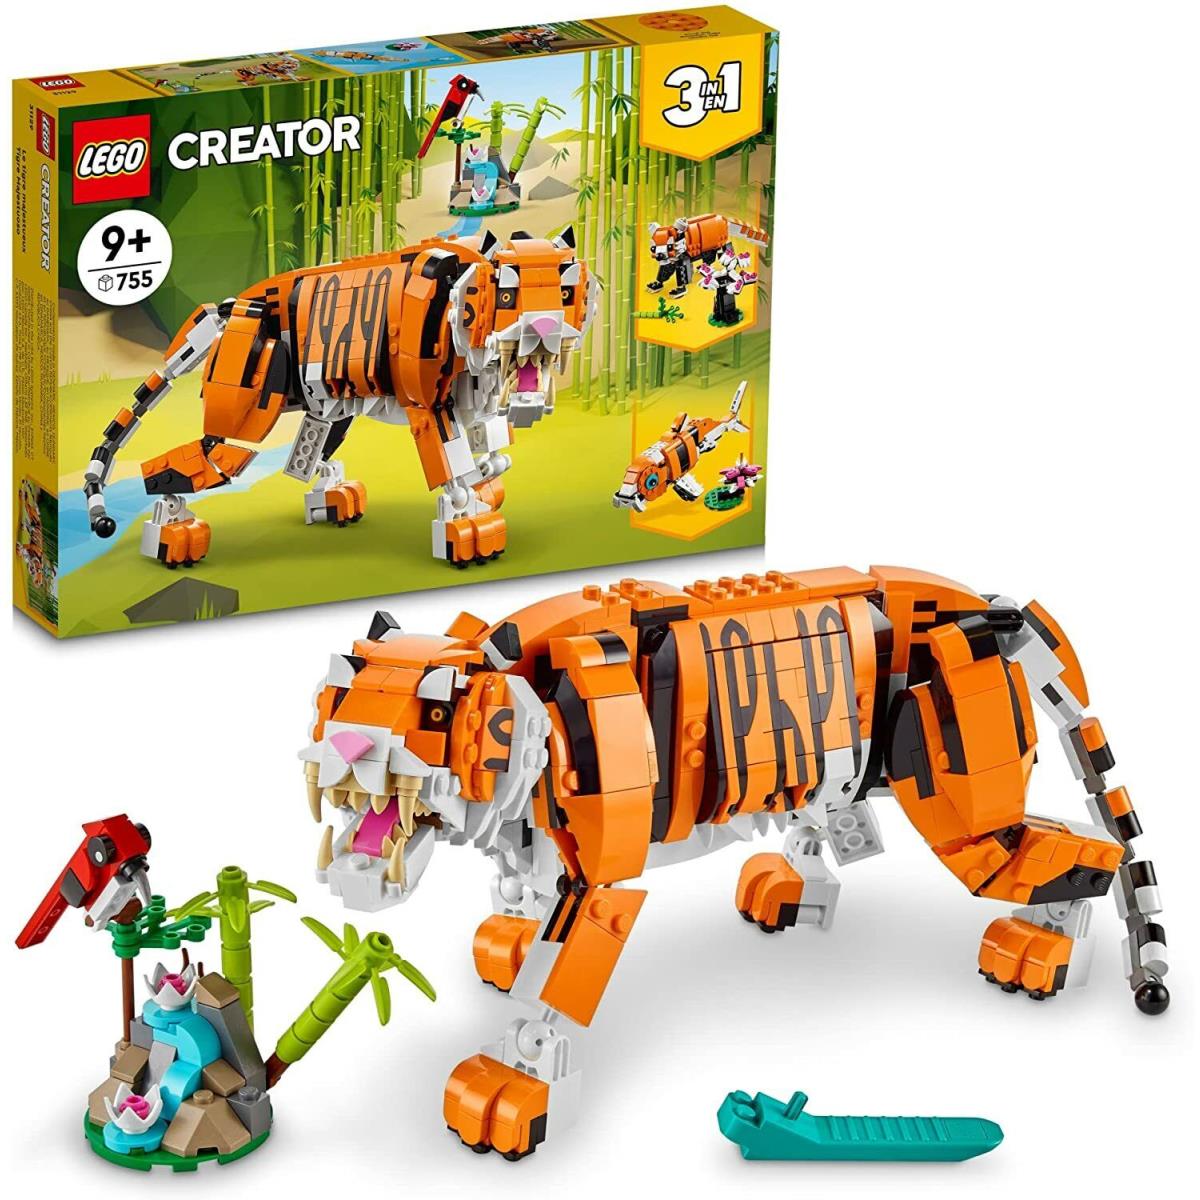 Lego Creator 3-in-1 Majestic Tiger Panda Koi Fish Building Kit - 755 Pieces